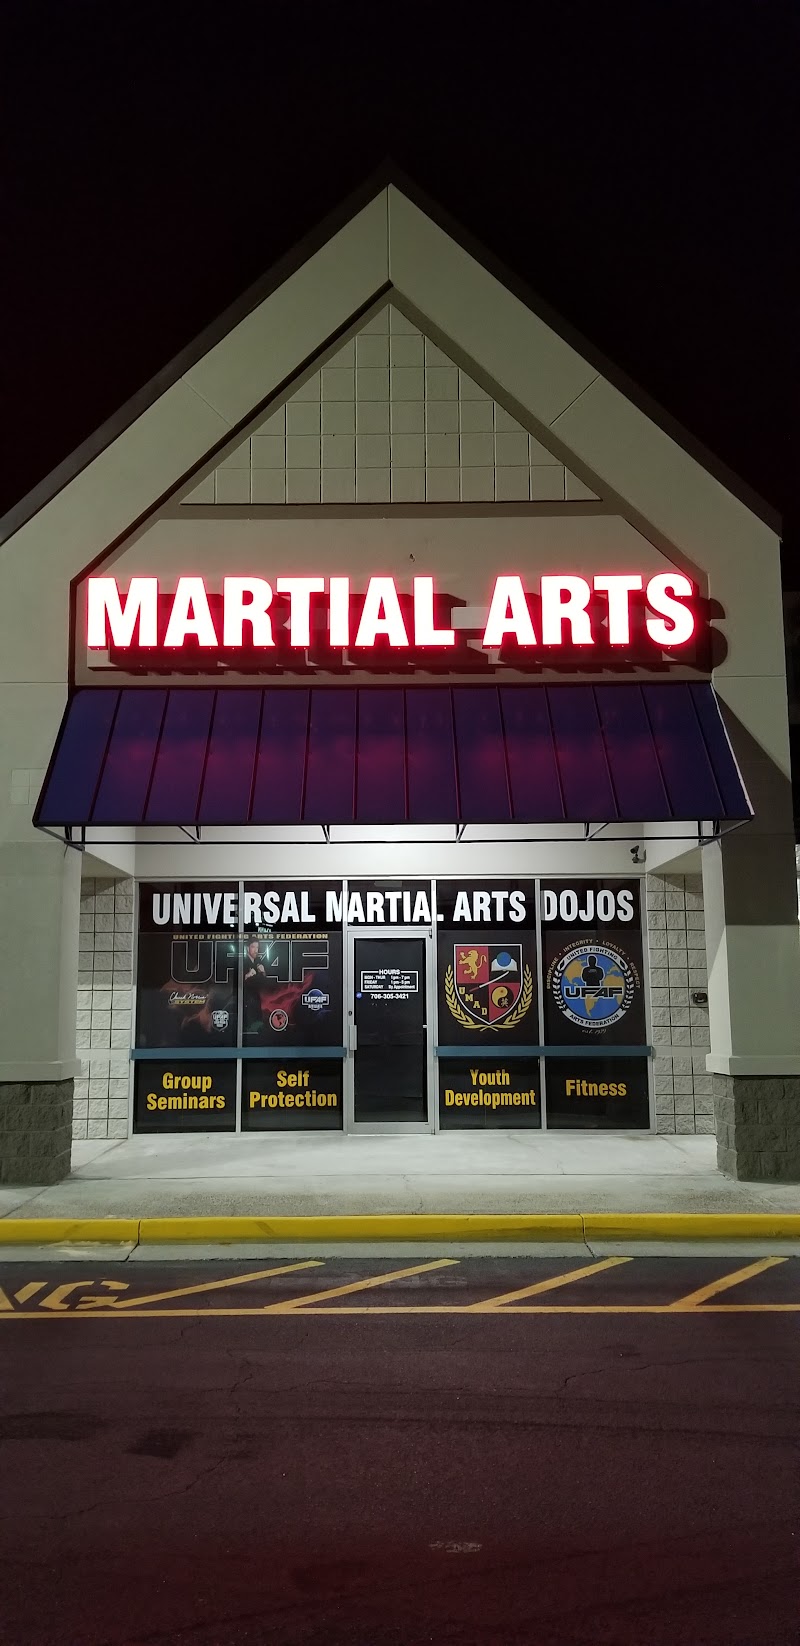 UMAD - Universal Martial Arts Dojos image 2